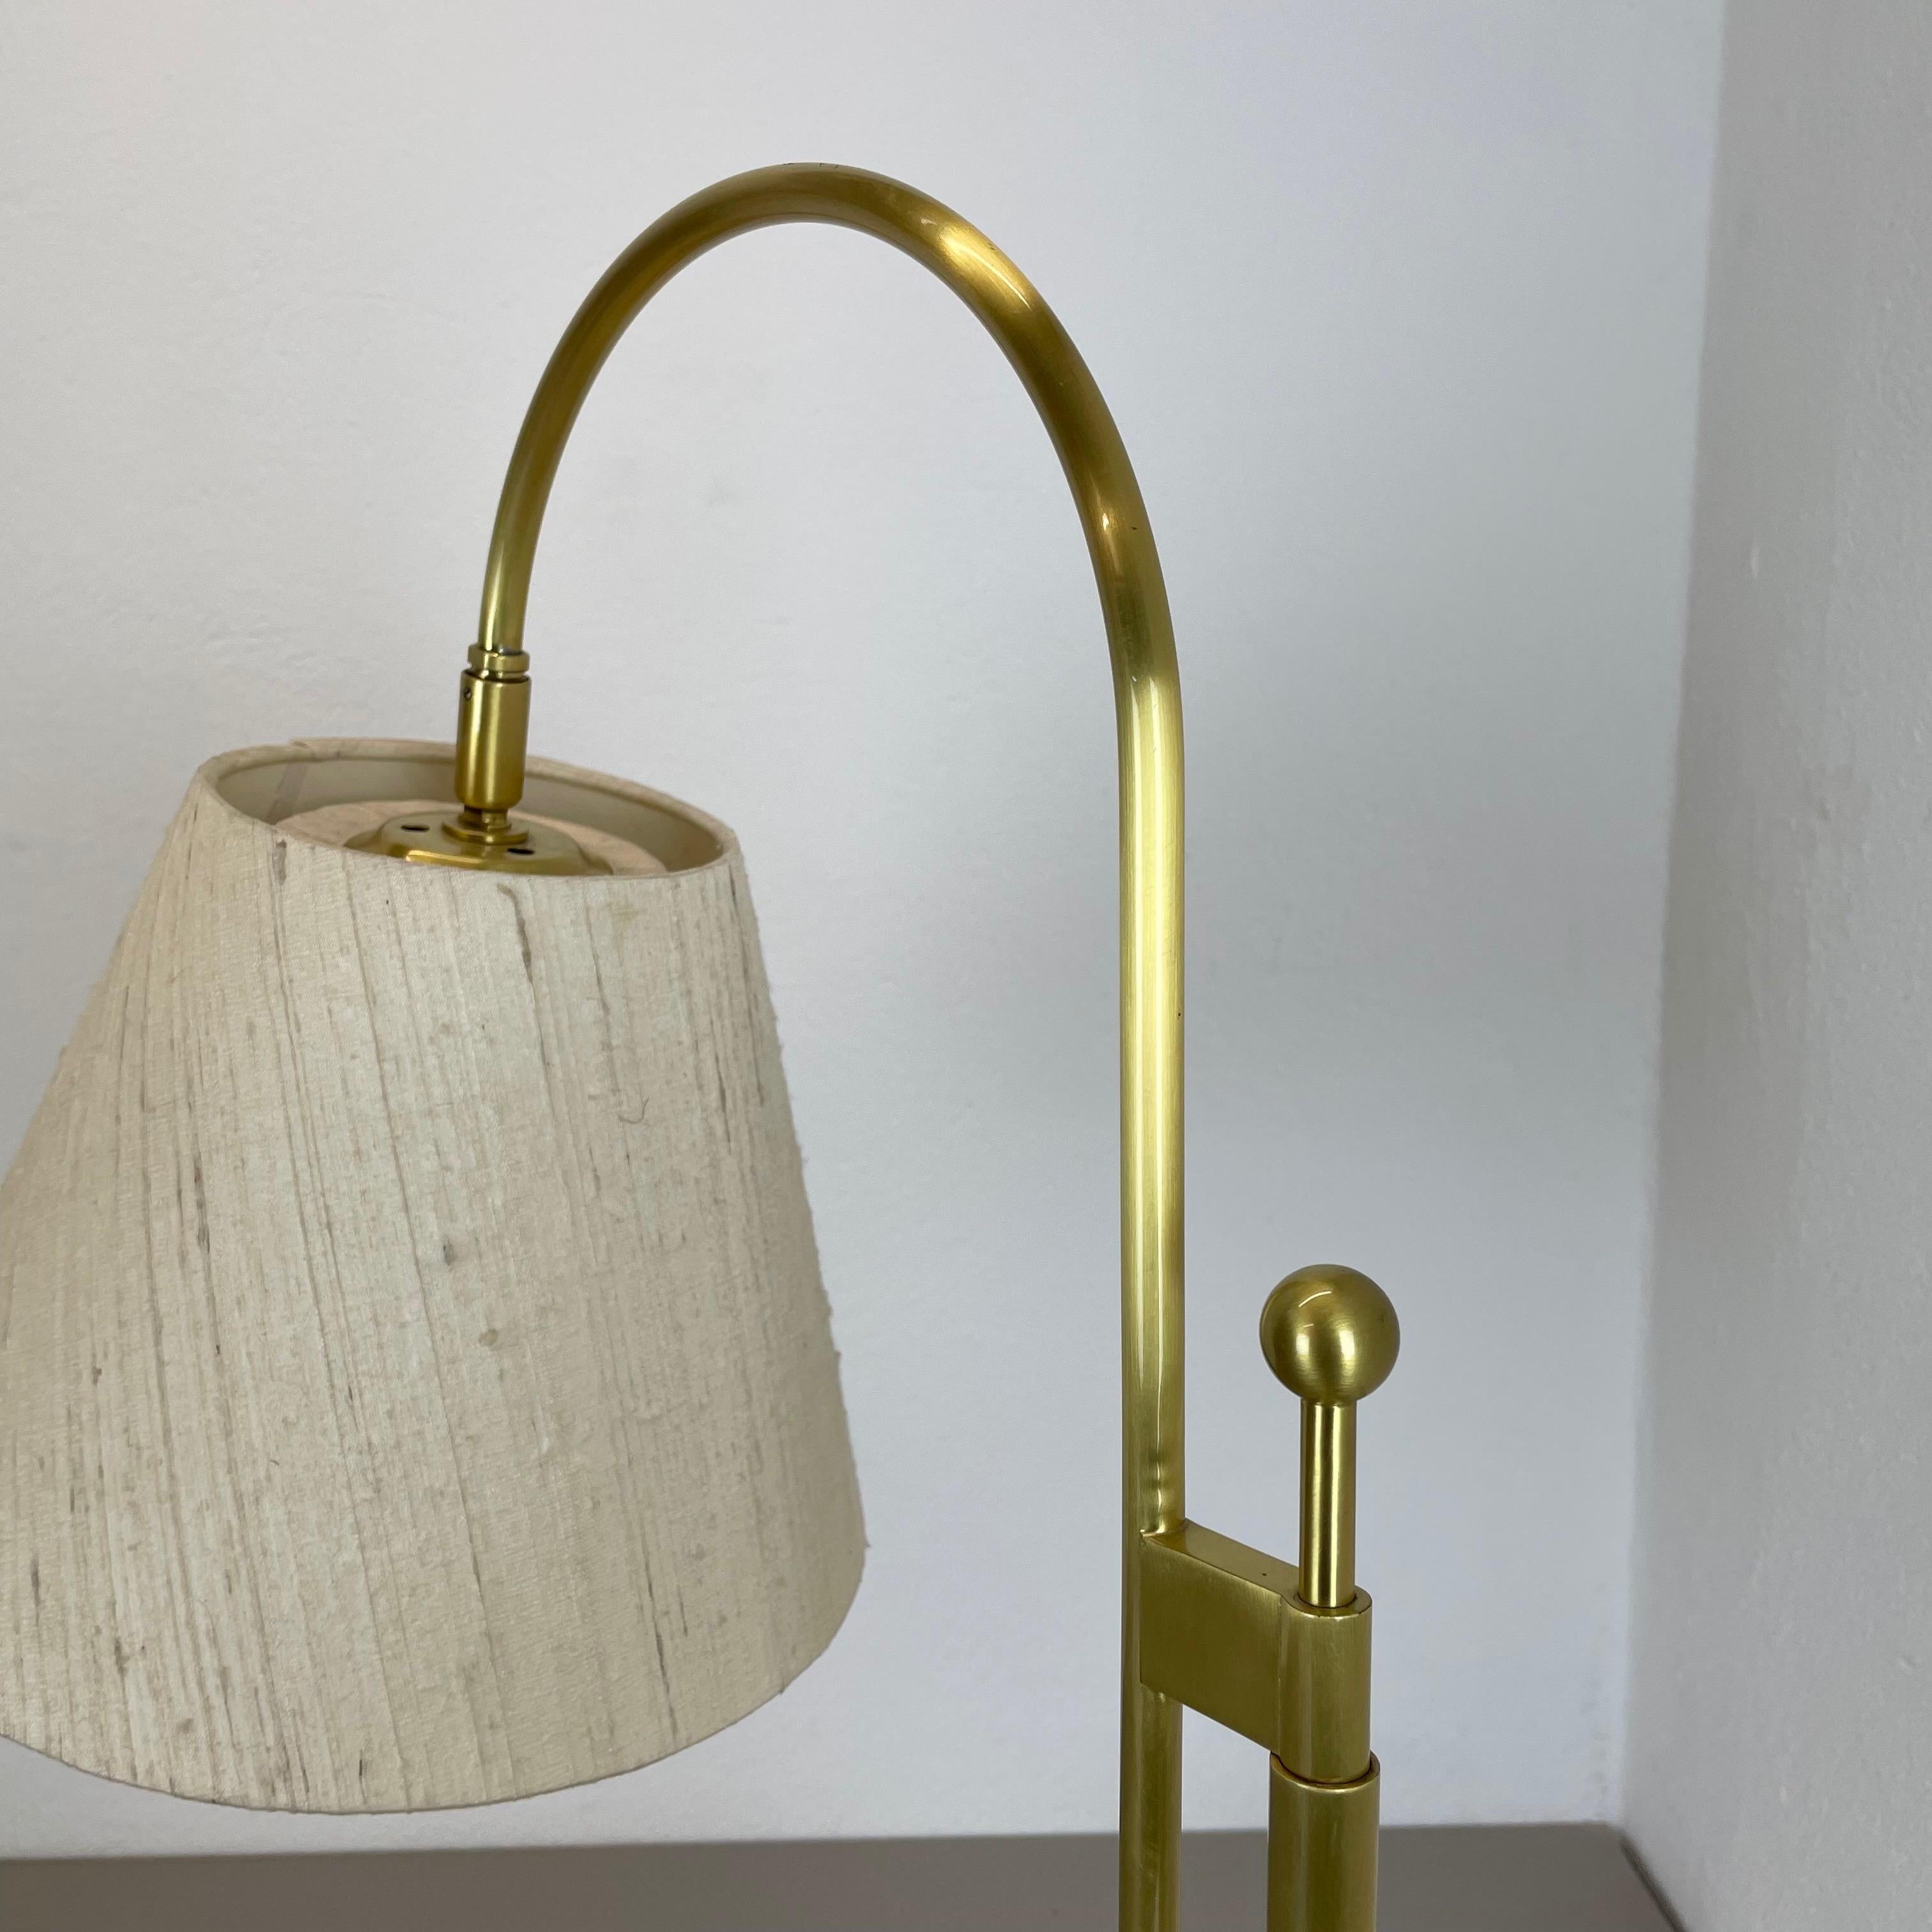 Original Hollywood Regency Stilnovo Style Brass Sputnik Table Light, Italy 1970s For Sale 10